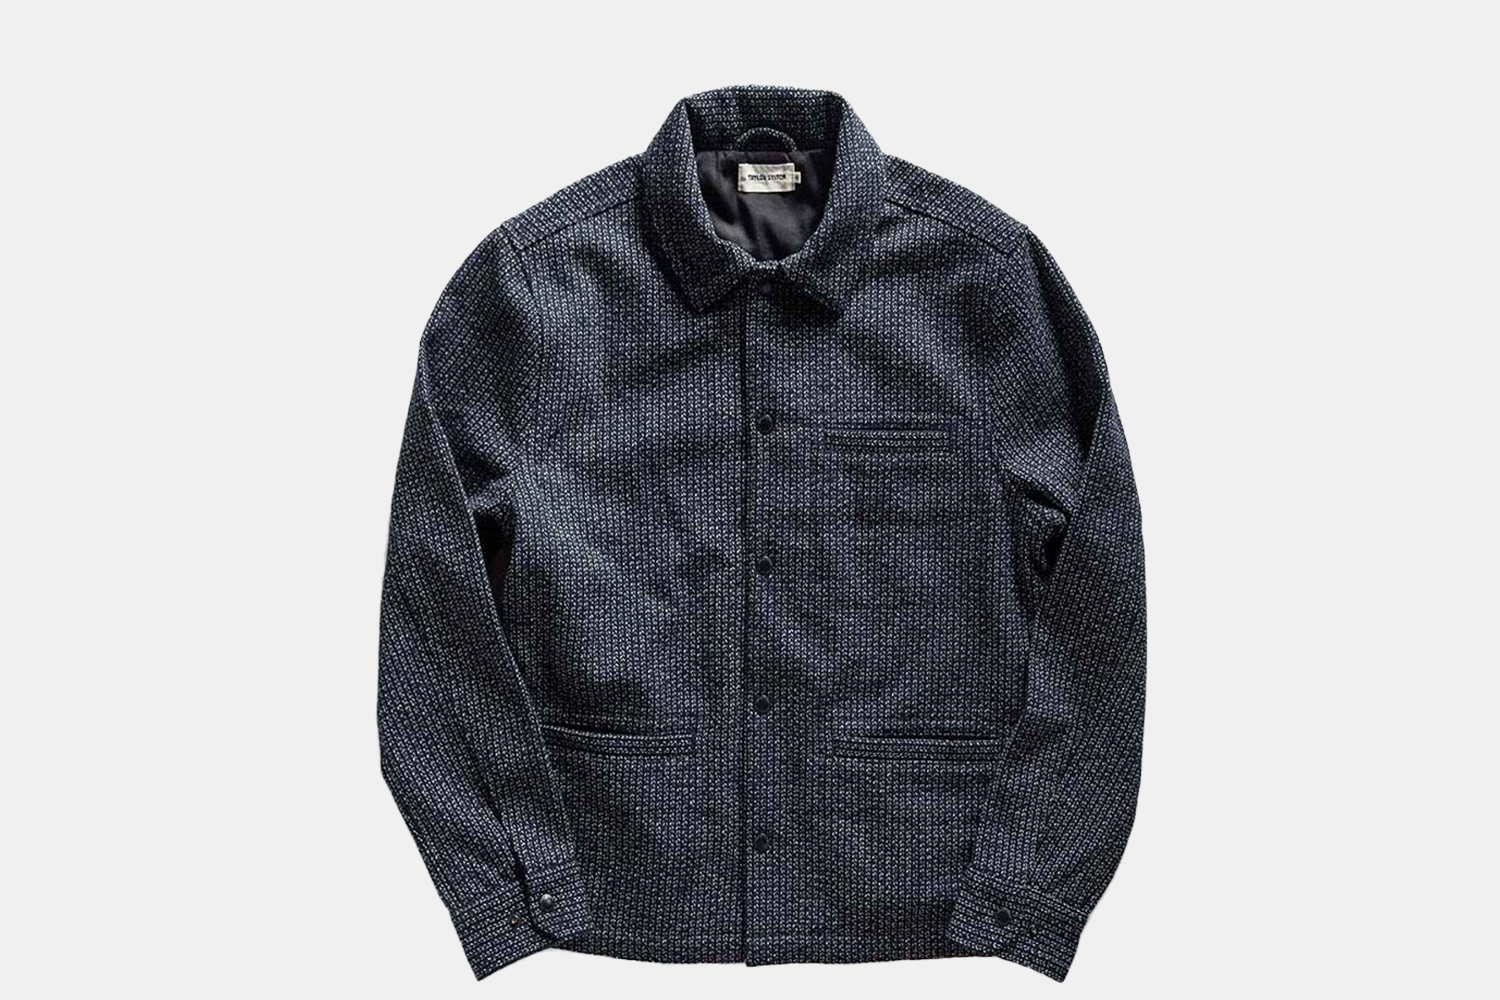 a knit, navy jacket